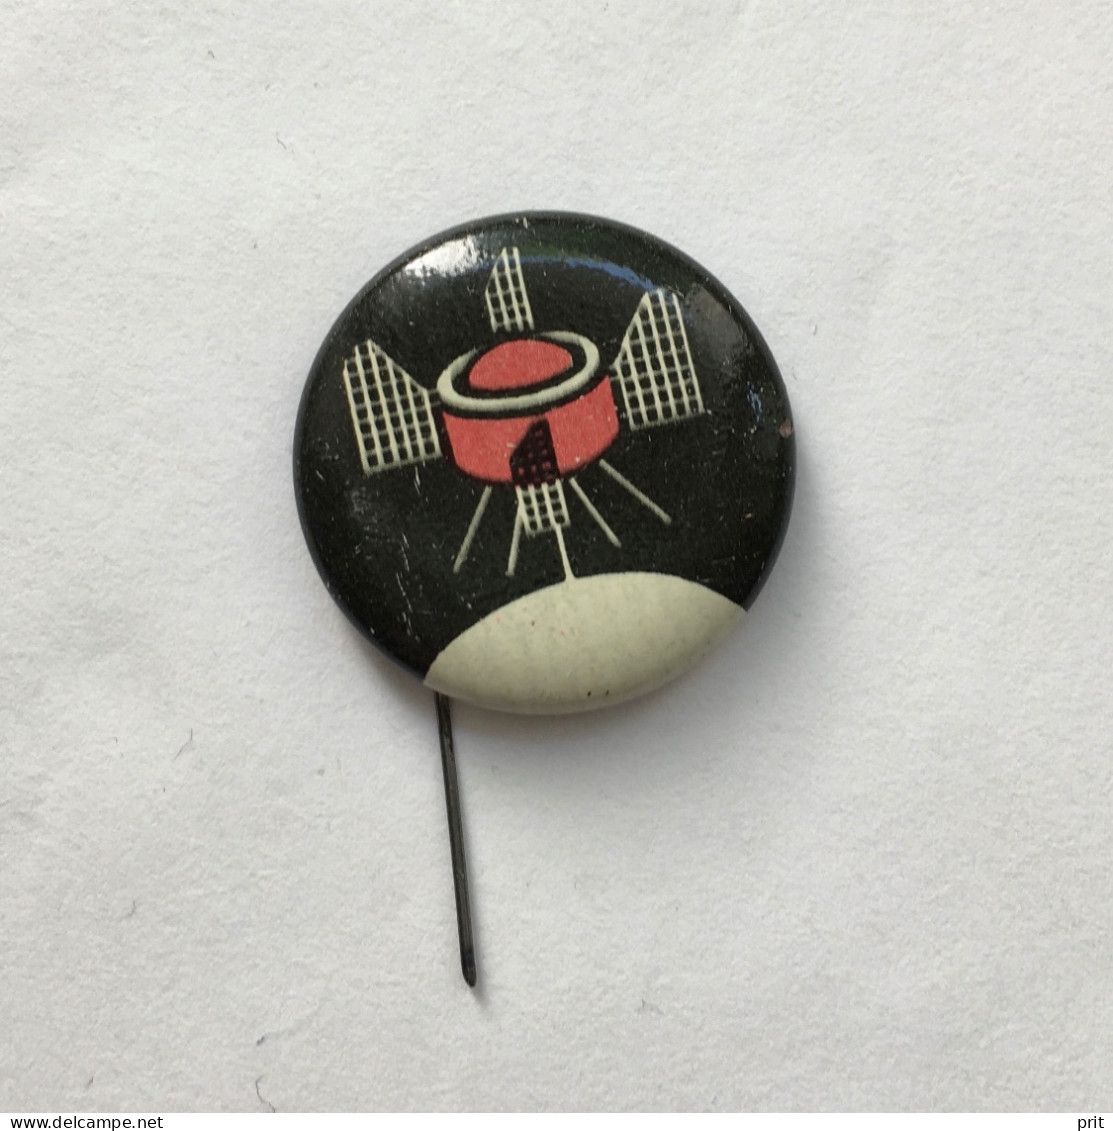 Sputnik Space Cosmos Spaceship Programe Soviet Russia USSR 1960s Vintage Pin Badge Metal - Espacio